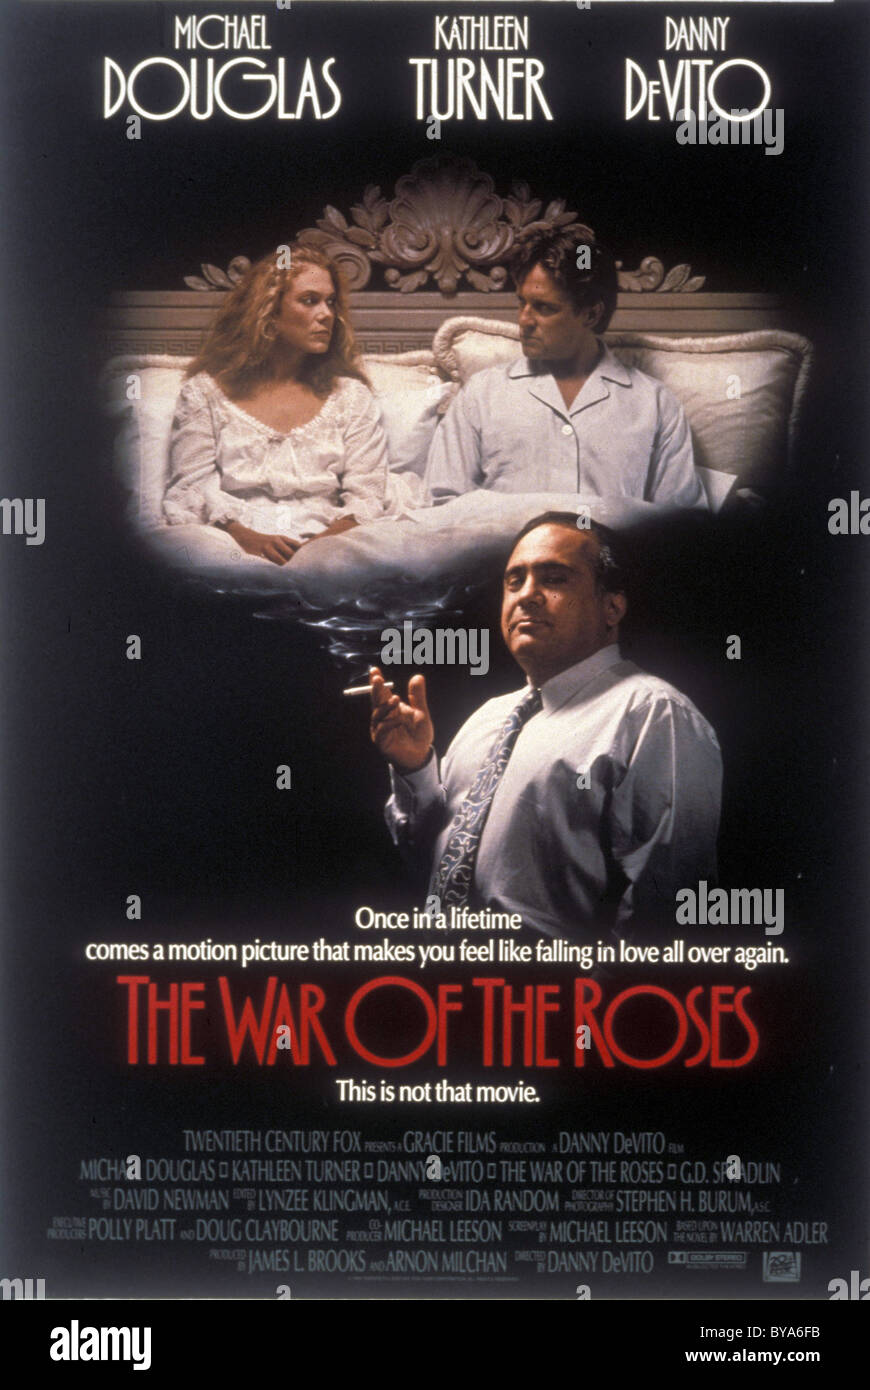 The War of the Roses  Year : 1989 USA Director : Danny De Vito Kathleen Turner, Michael Douglas, Danny DeVito Movie poster (USA) Stock Photo